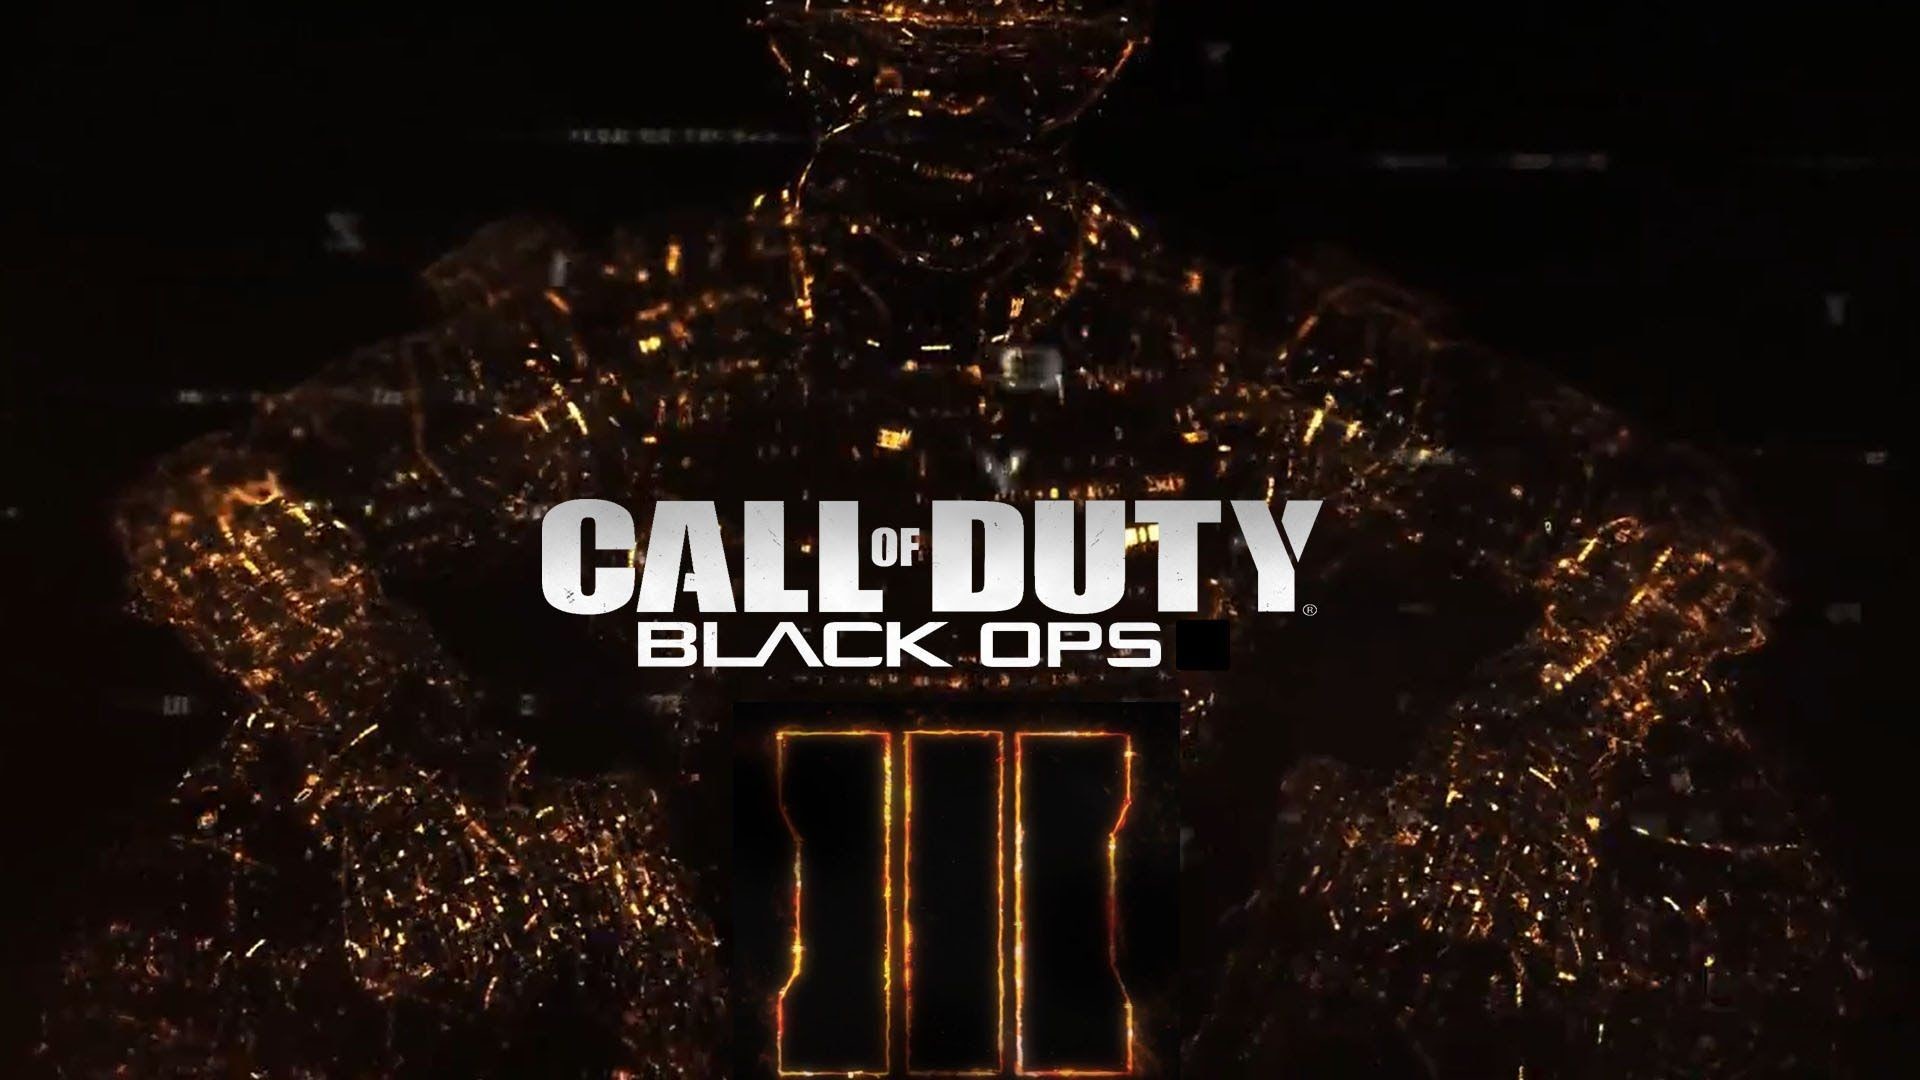 1920x1080 Full HD Call of Duty Black Ops III Wallpaper